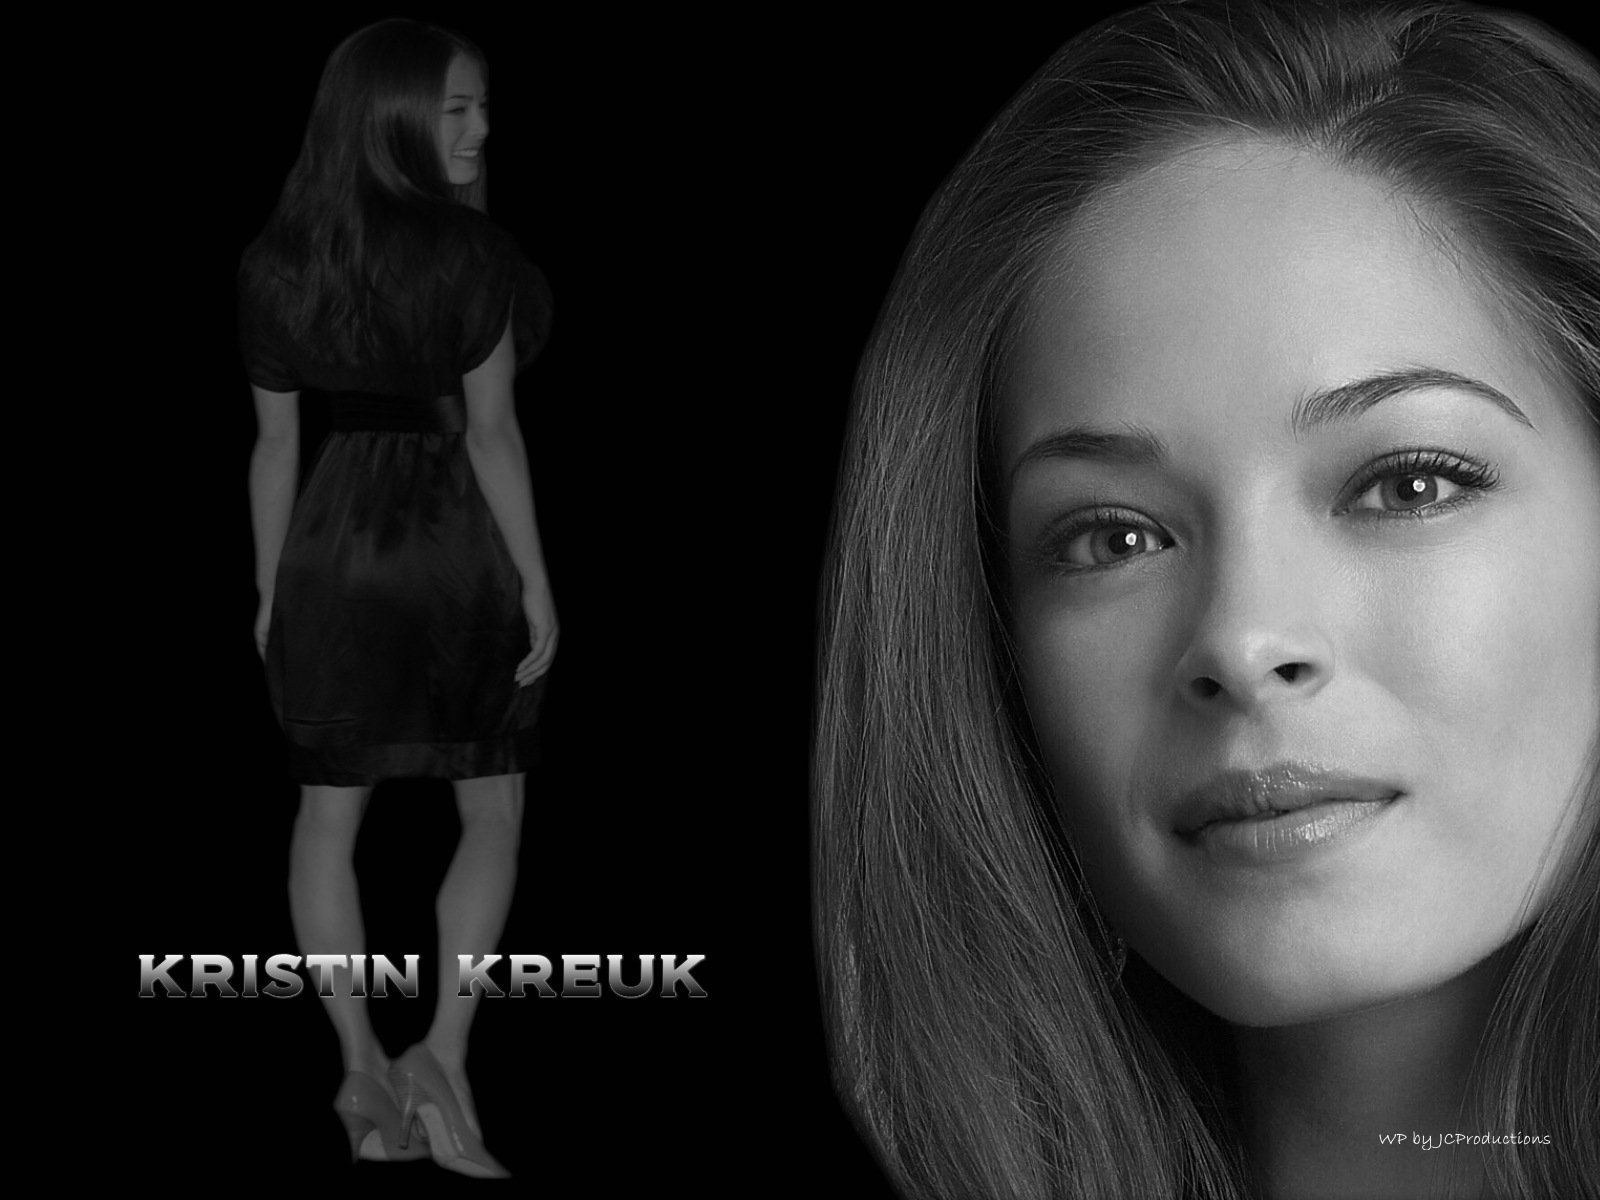 Kristin Kreuk in the Spotlight - Kristin Kreuk Wallpaper (18010463 ...